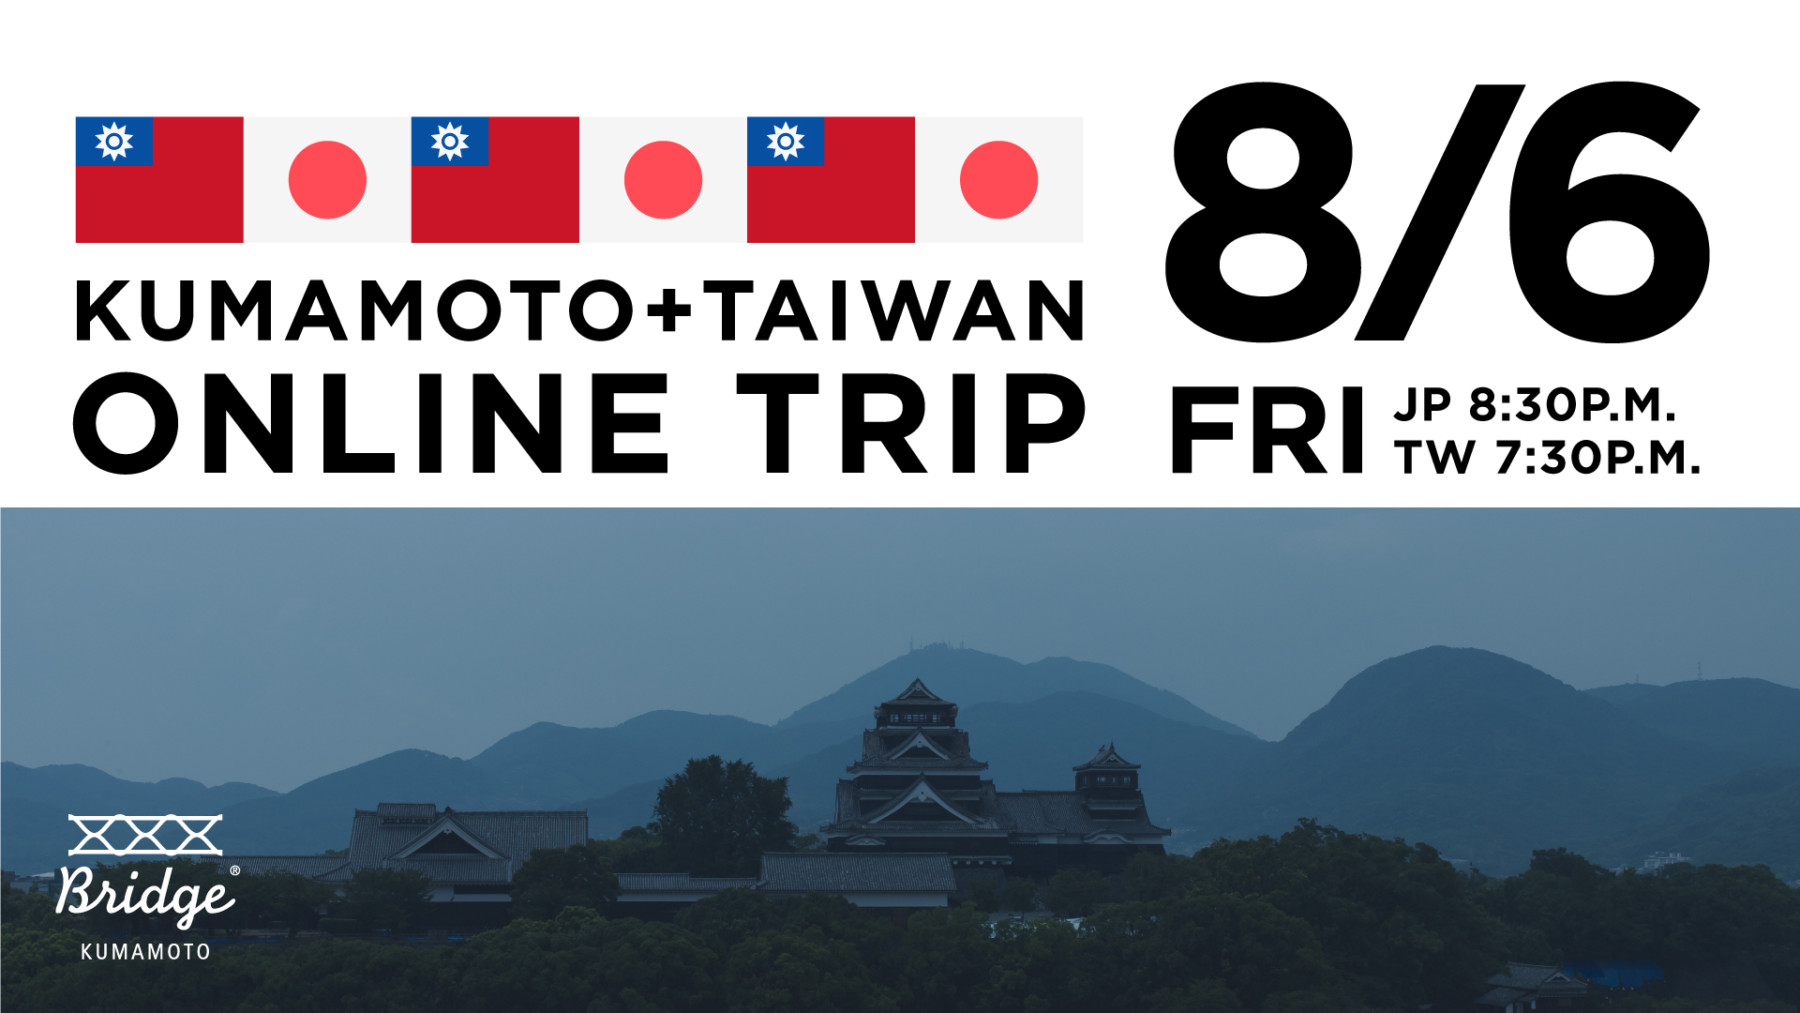 KUMAMOTO + TAIWAN ONLINE TRIP